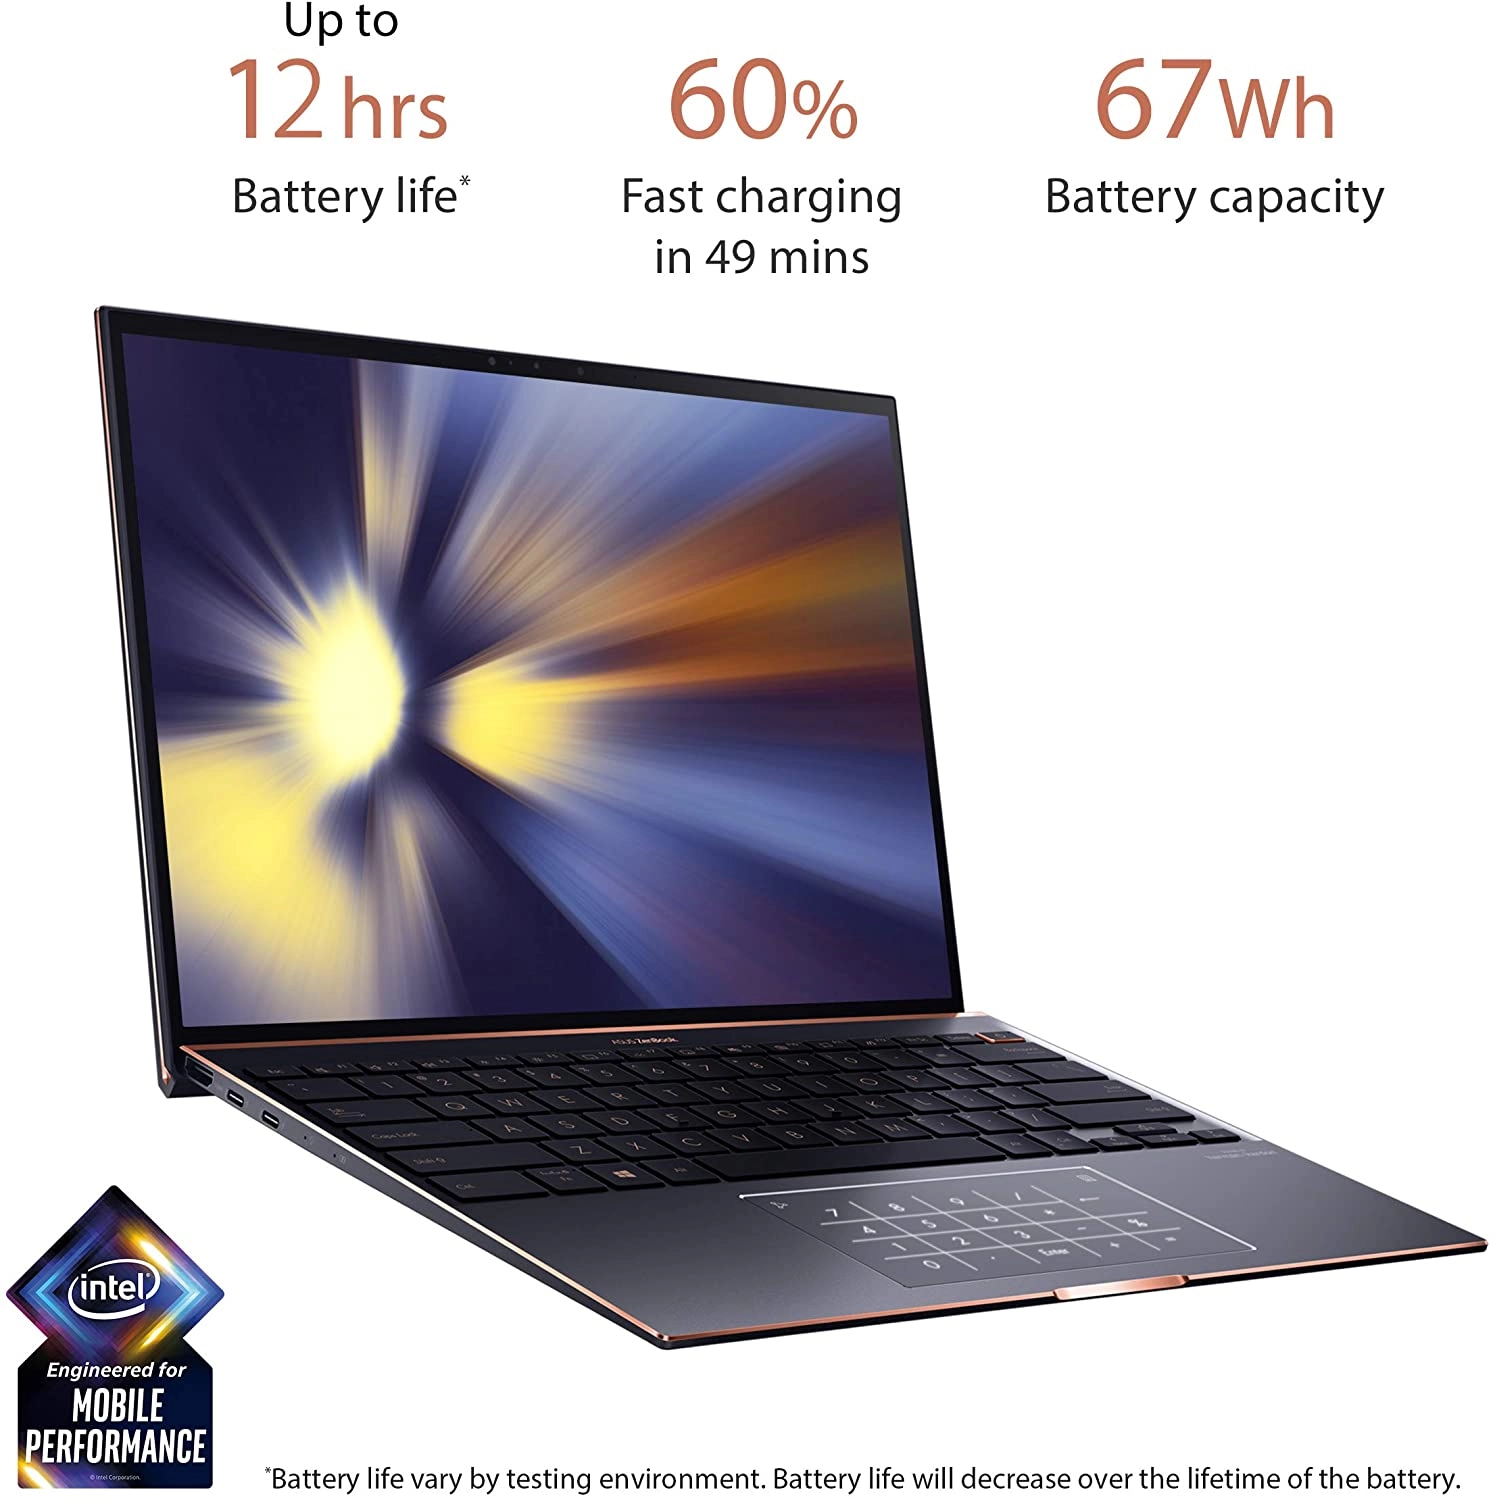 Asus ZenBook S laptop image